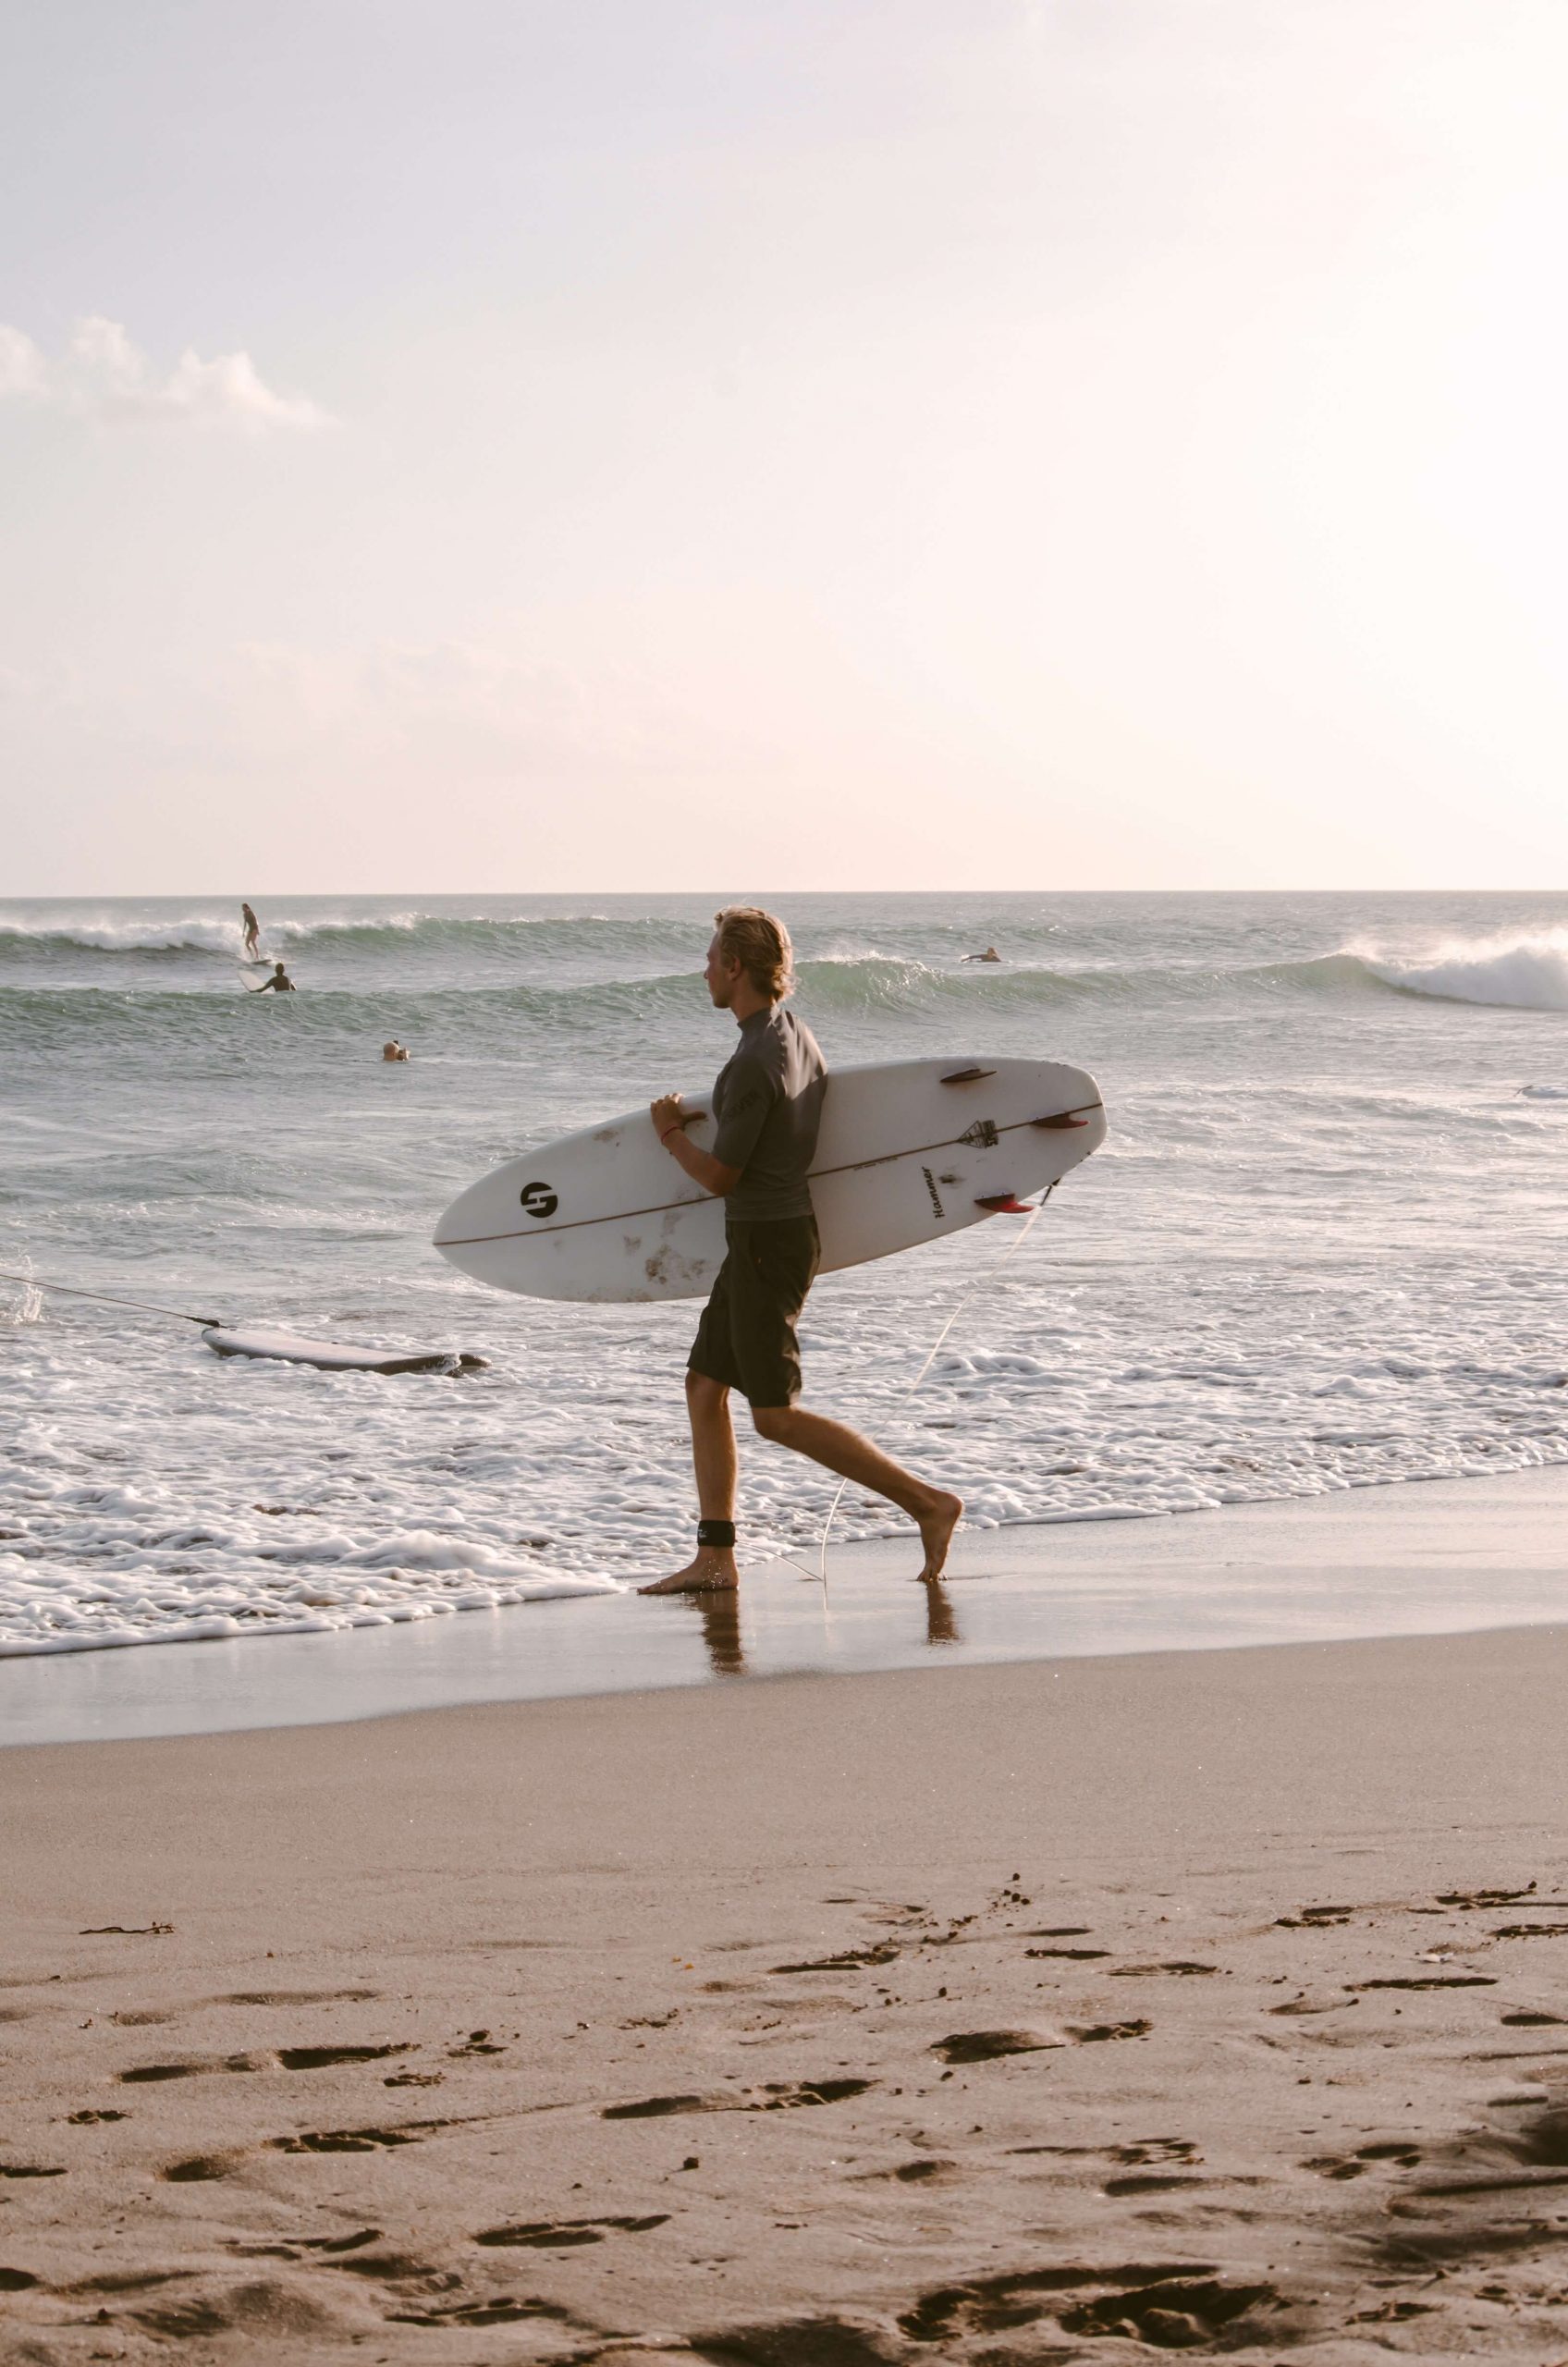 Male surfer holding short board walks towards the water.